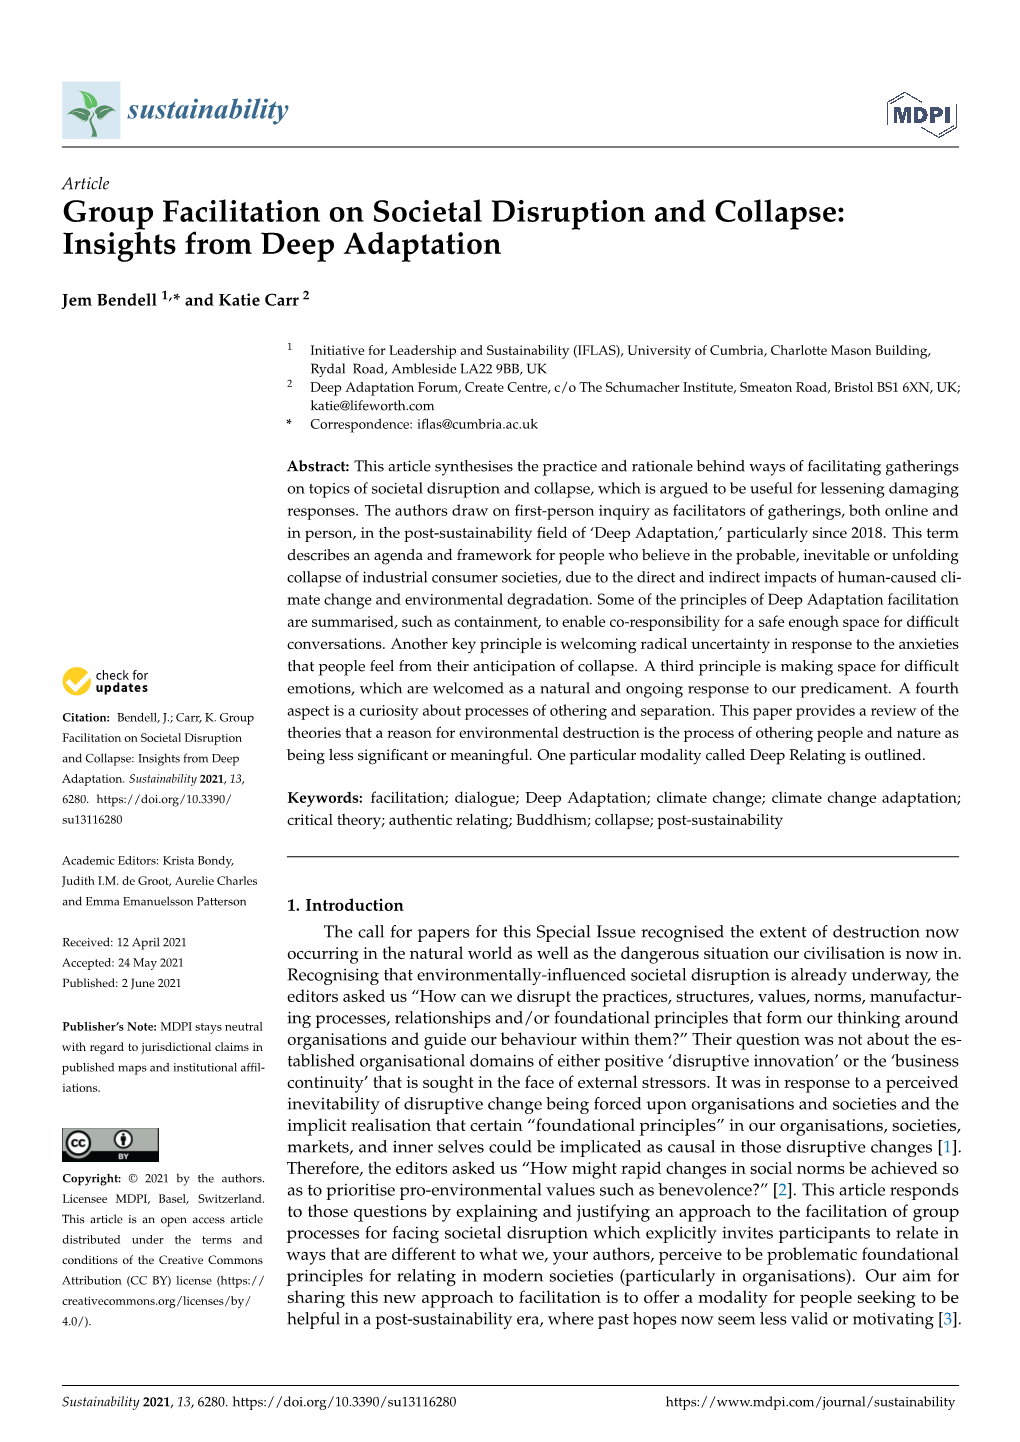 Insights from Deep Adaptation